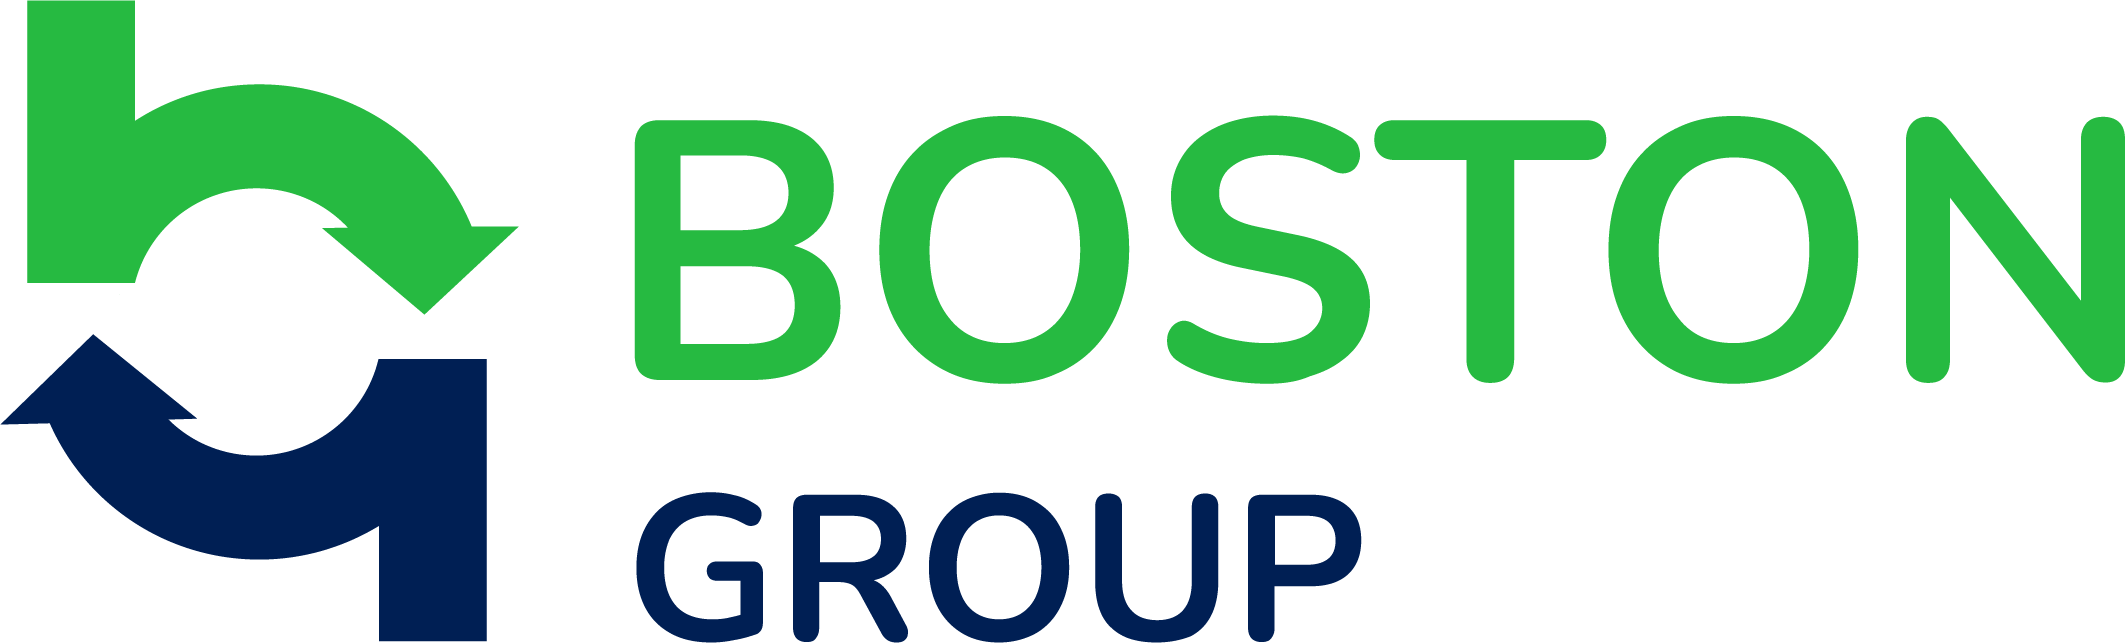 Boston Group